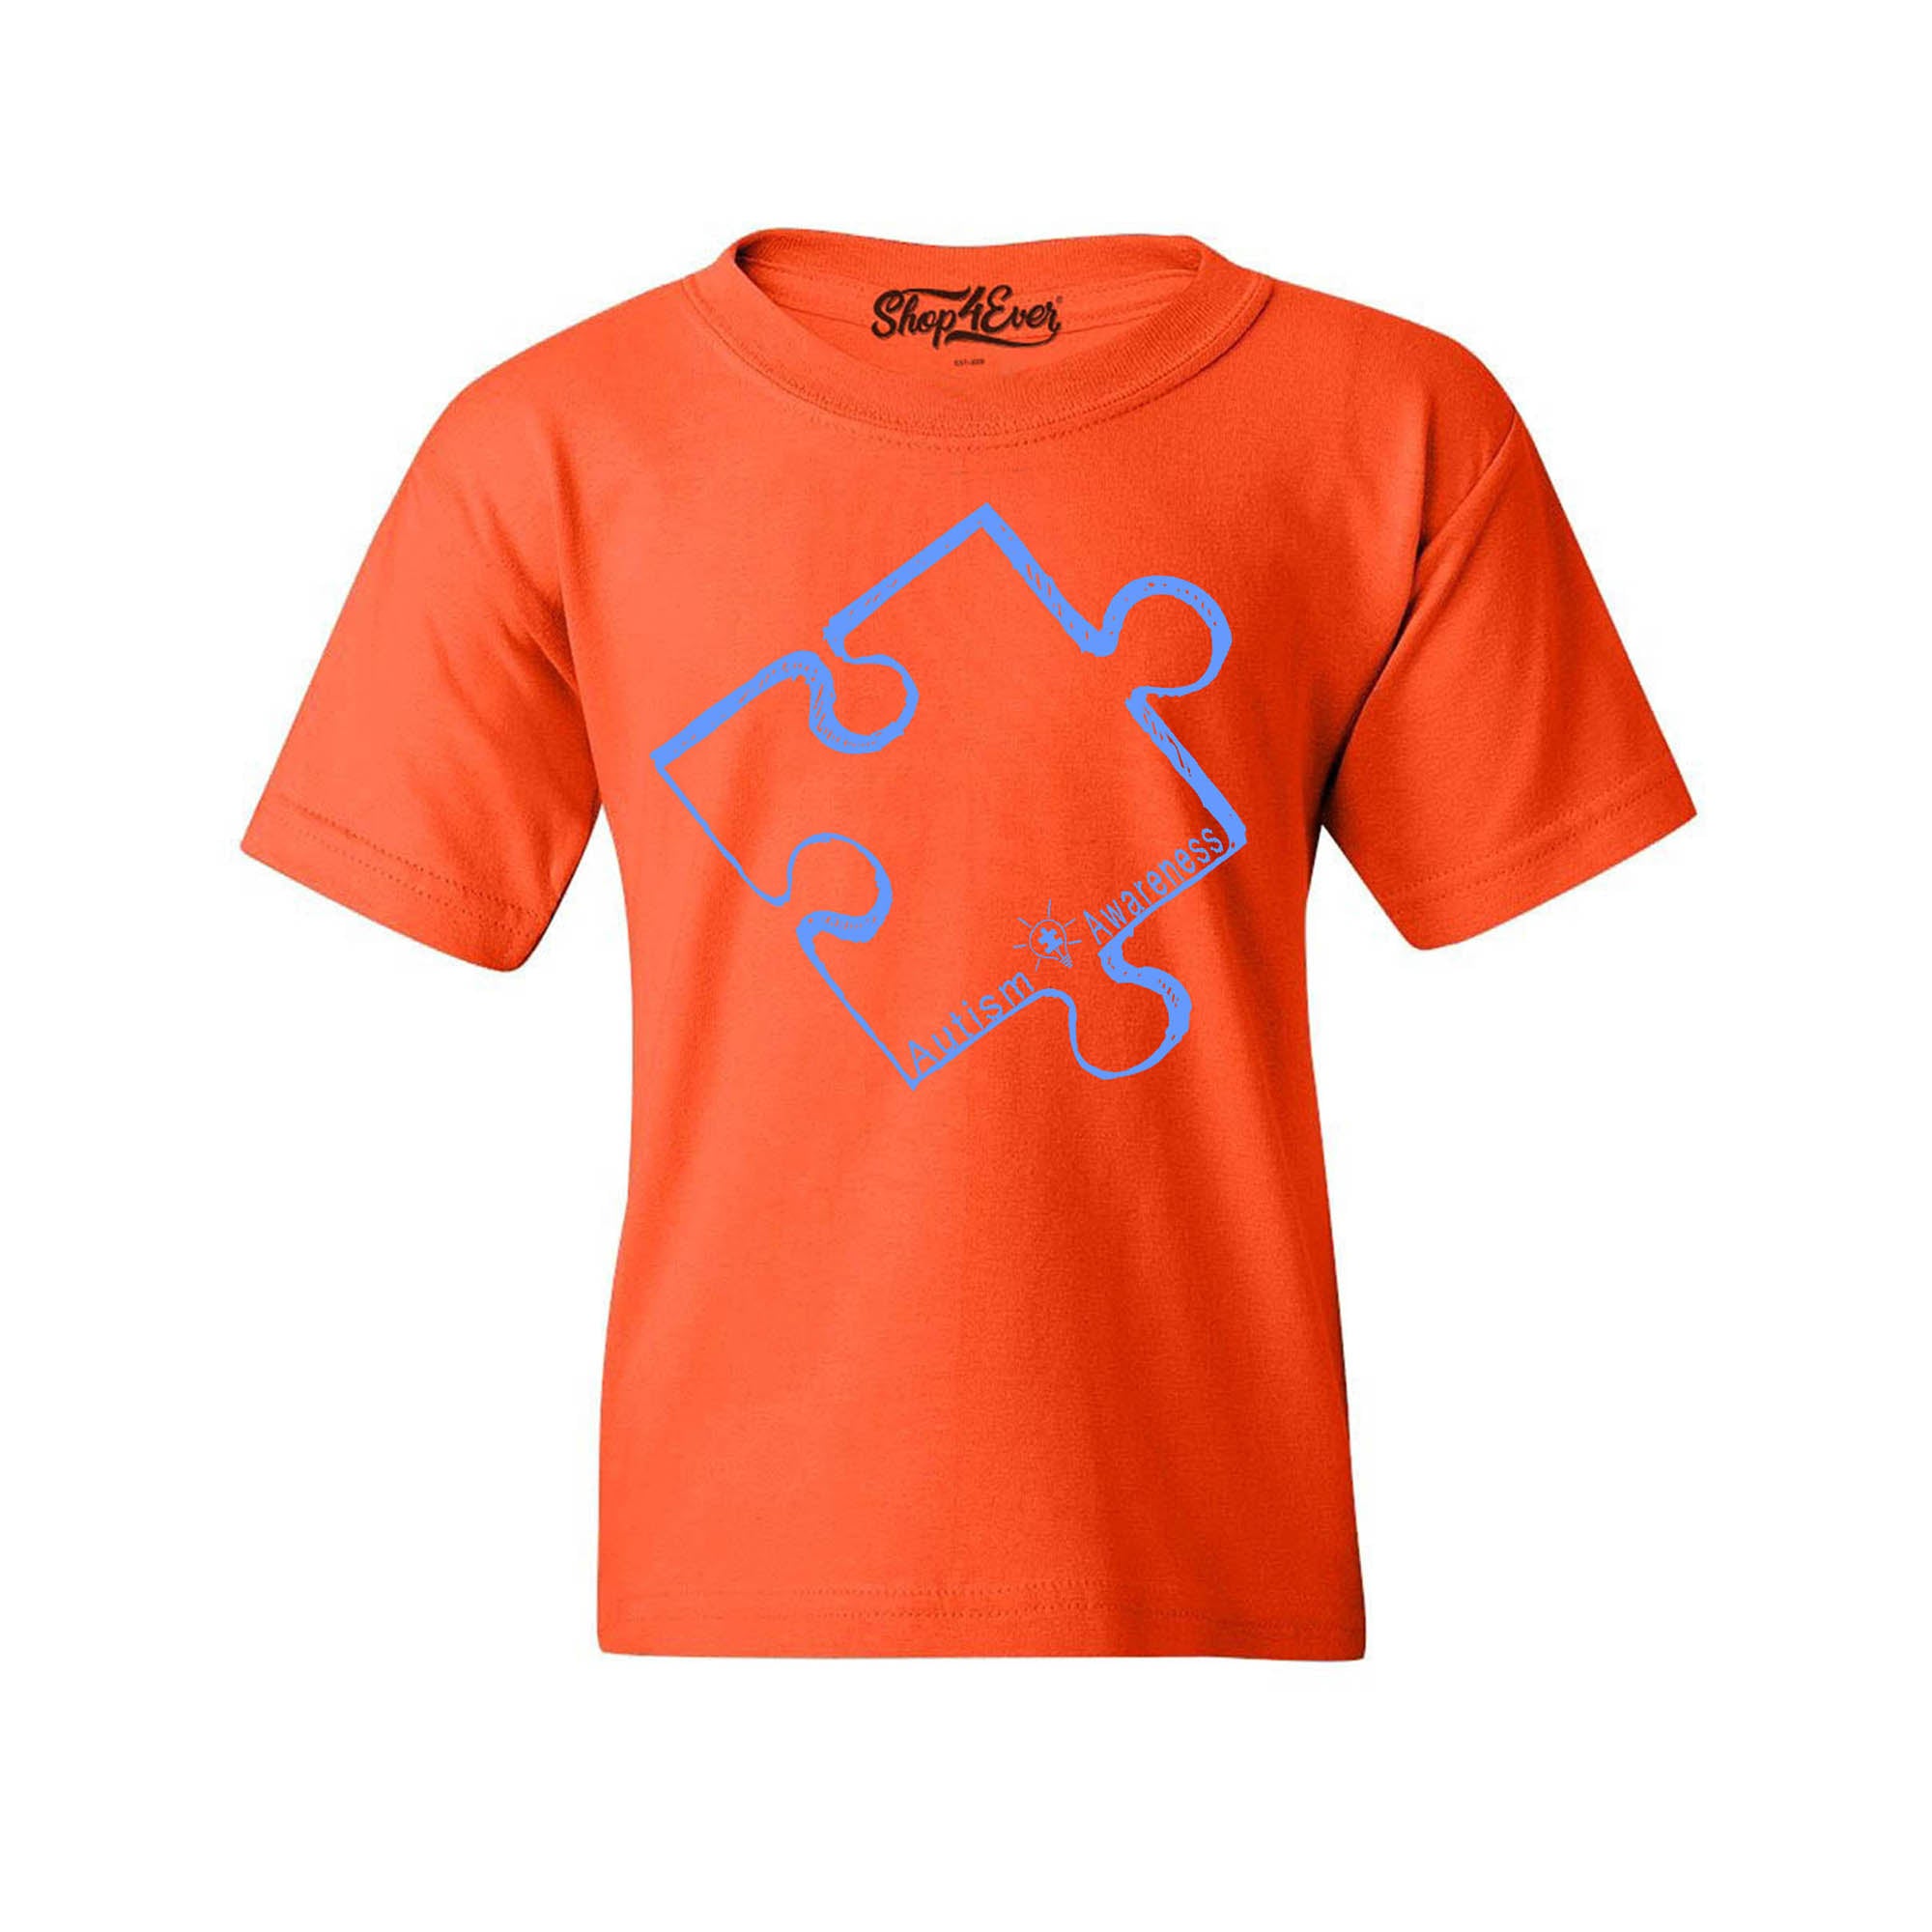 Blue Puzzle Piece Autism Awareness Child's T-Shirt Kids Tee